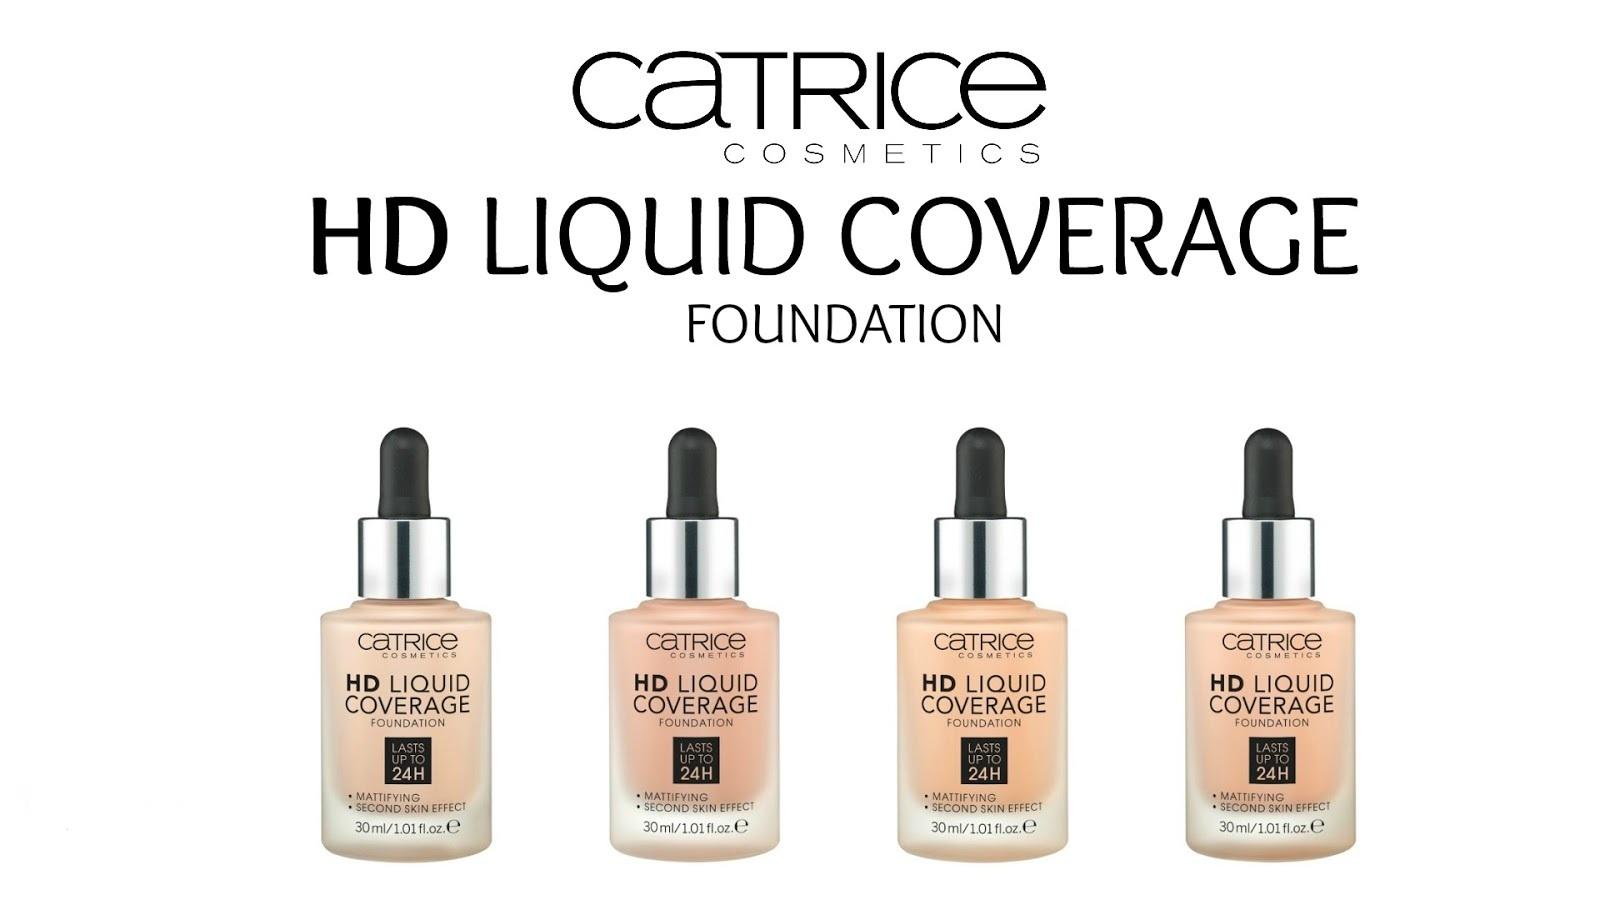 Catrice - HD Liquid Coverage Intro.jpg